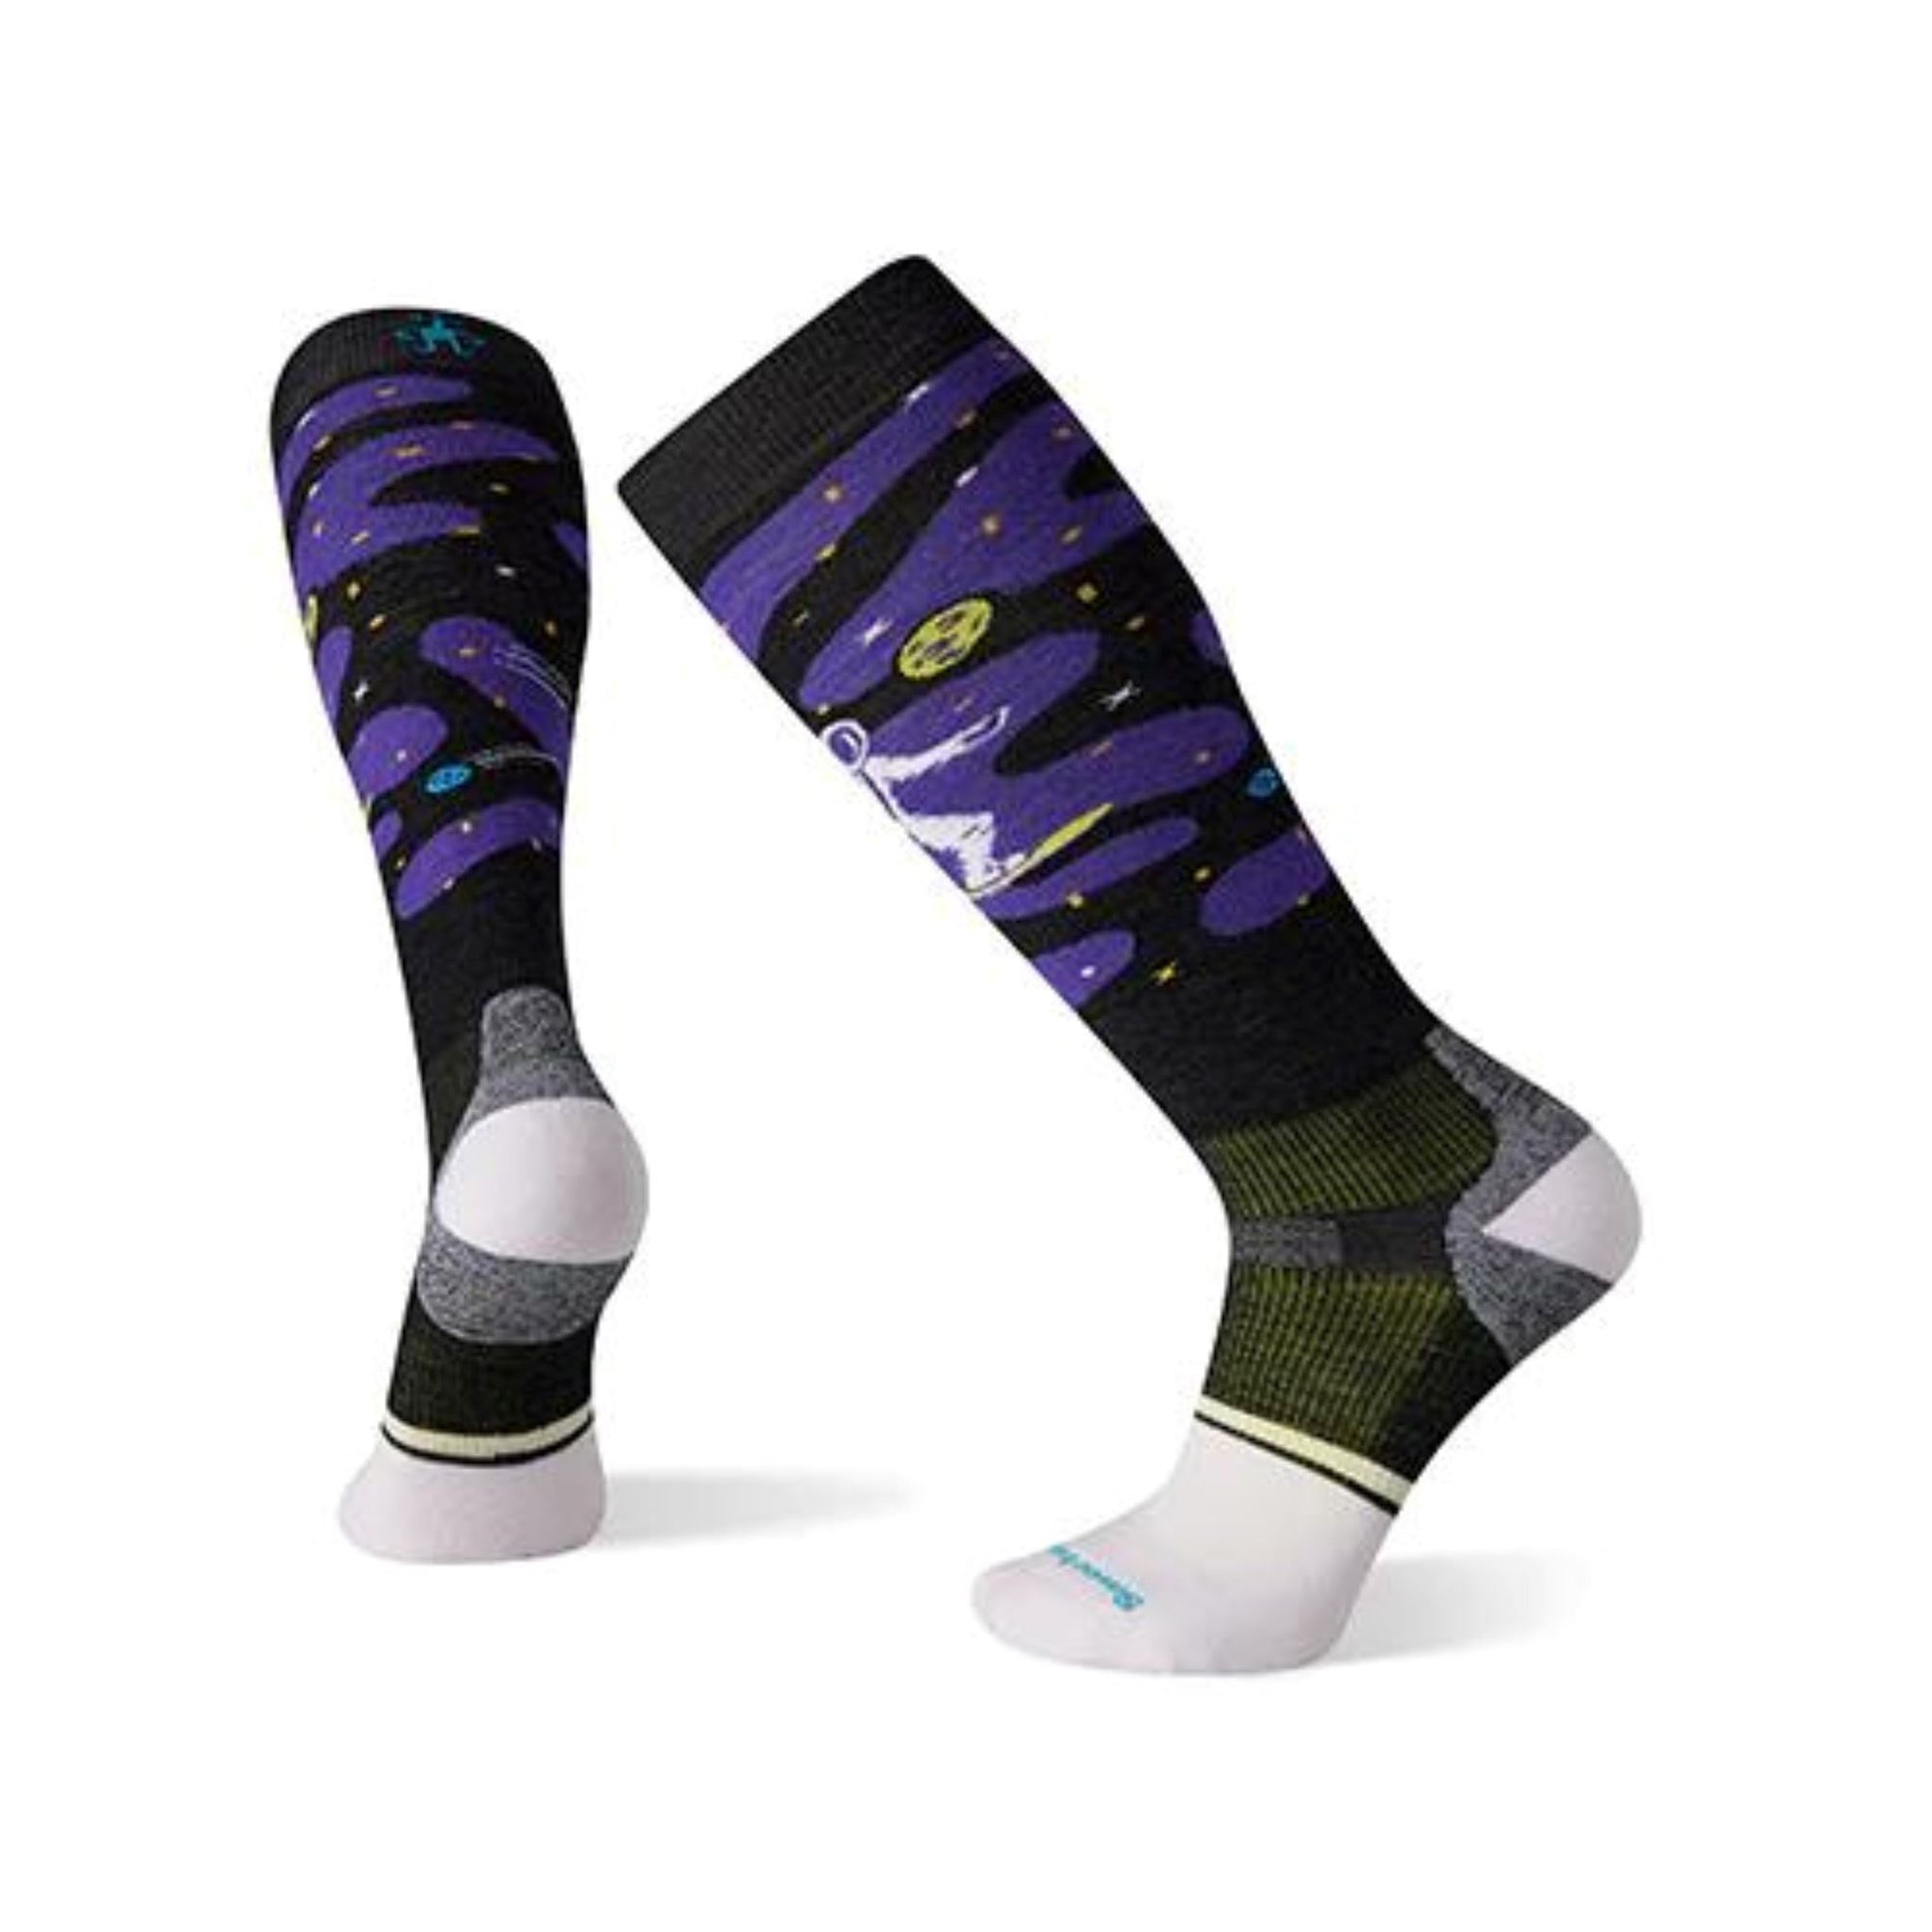 Mens Smartwool Targeted Cushion Socks - Astronaut Charcoal Socks Smartwool 